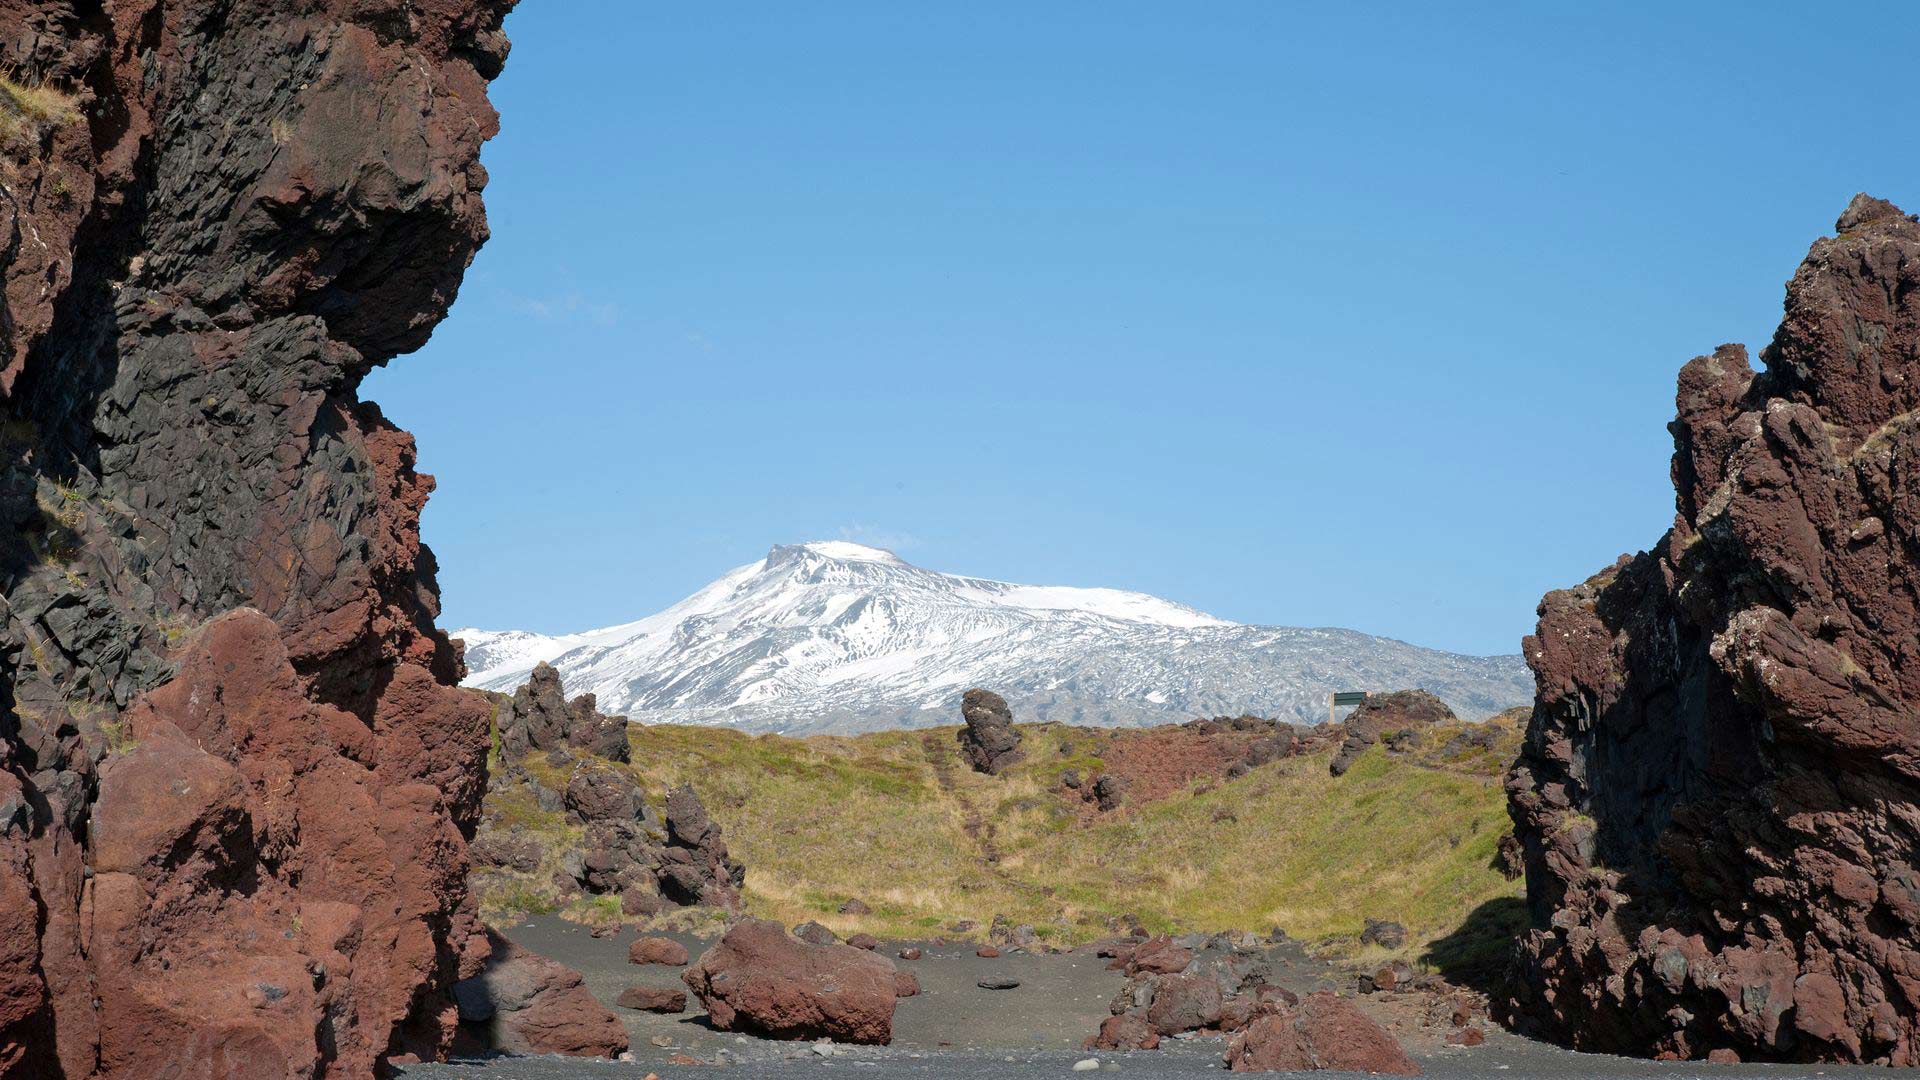 Dritvík cove with Snæfellsjökull volcano in the background